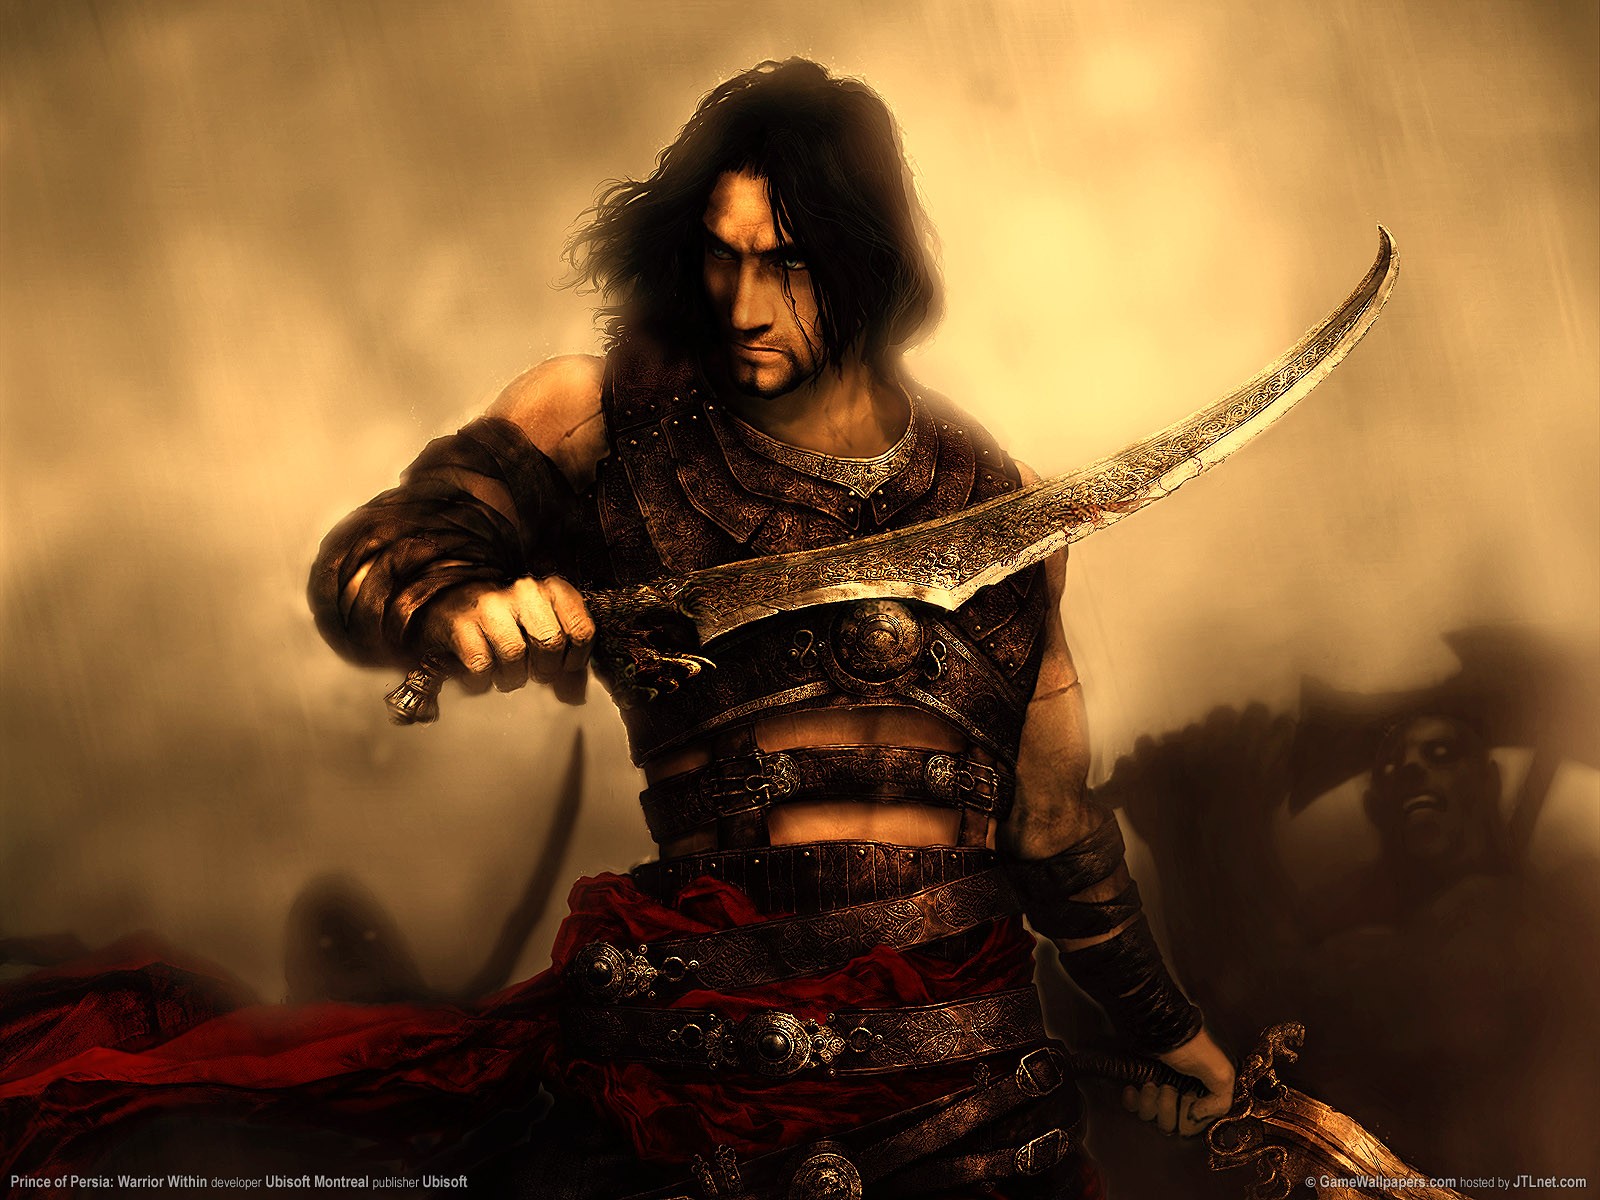 General 1600x1200 Prince of Persia: Warrior Within video games Ubisoft fantasy men video game men dark hair video game art